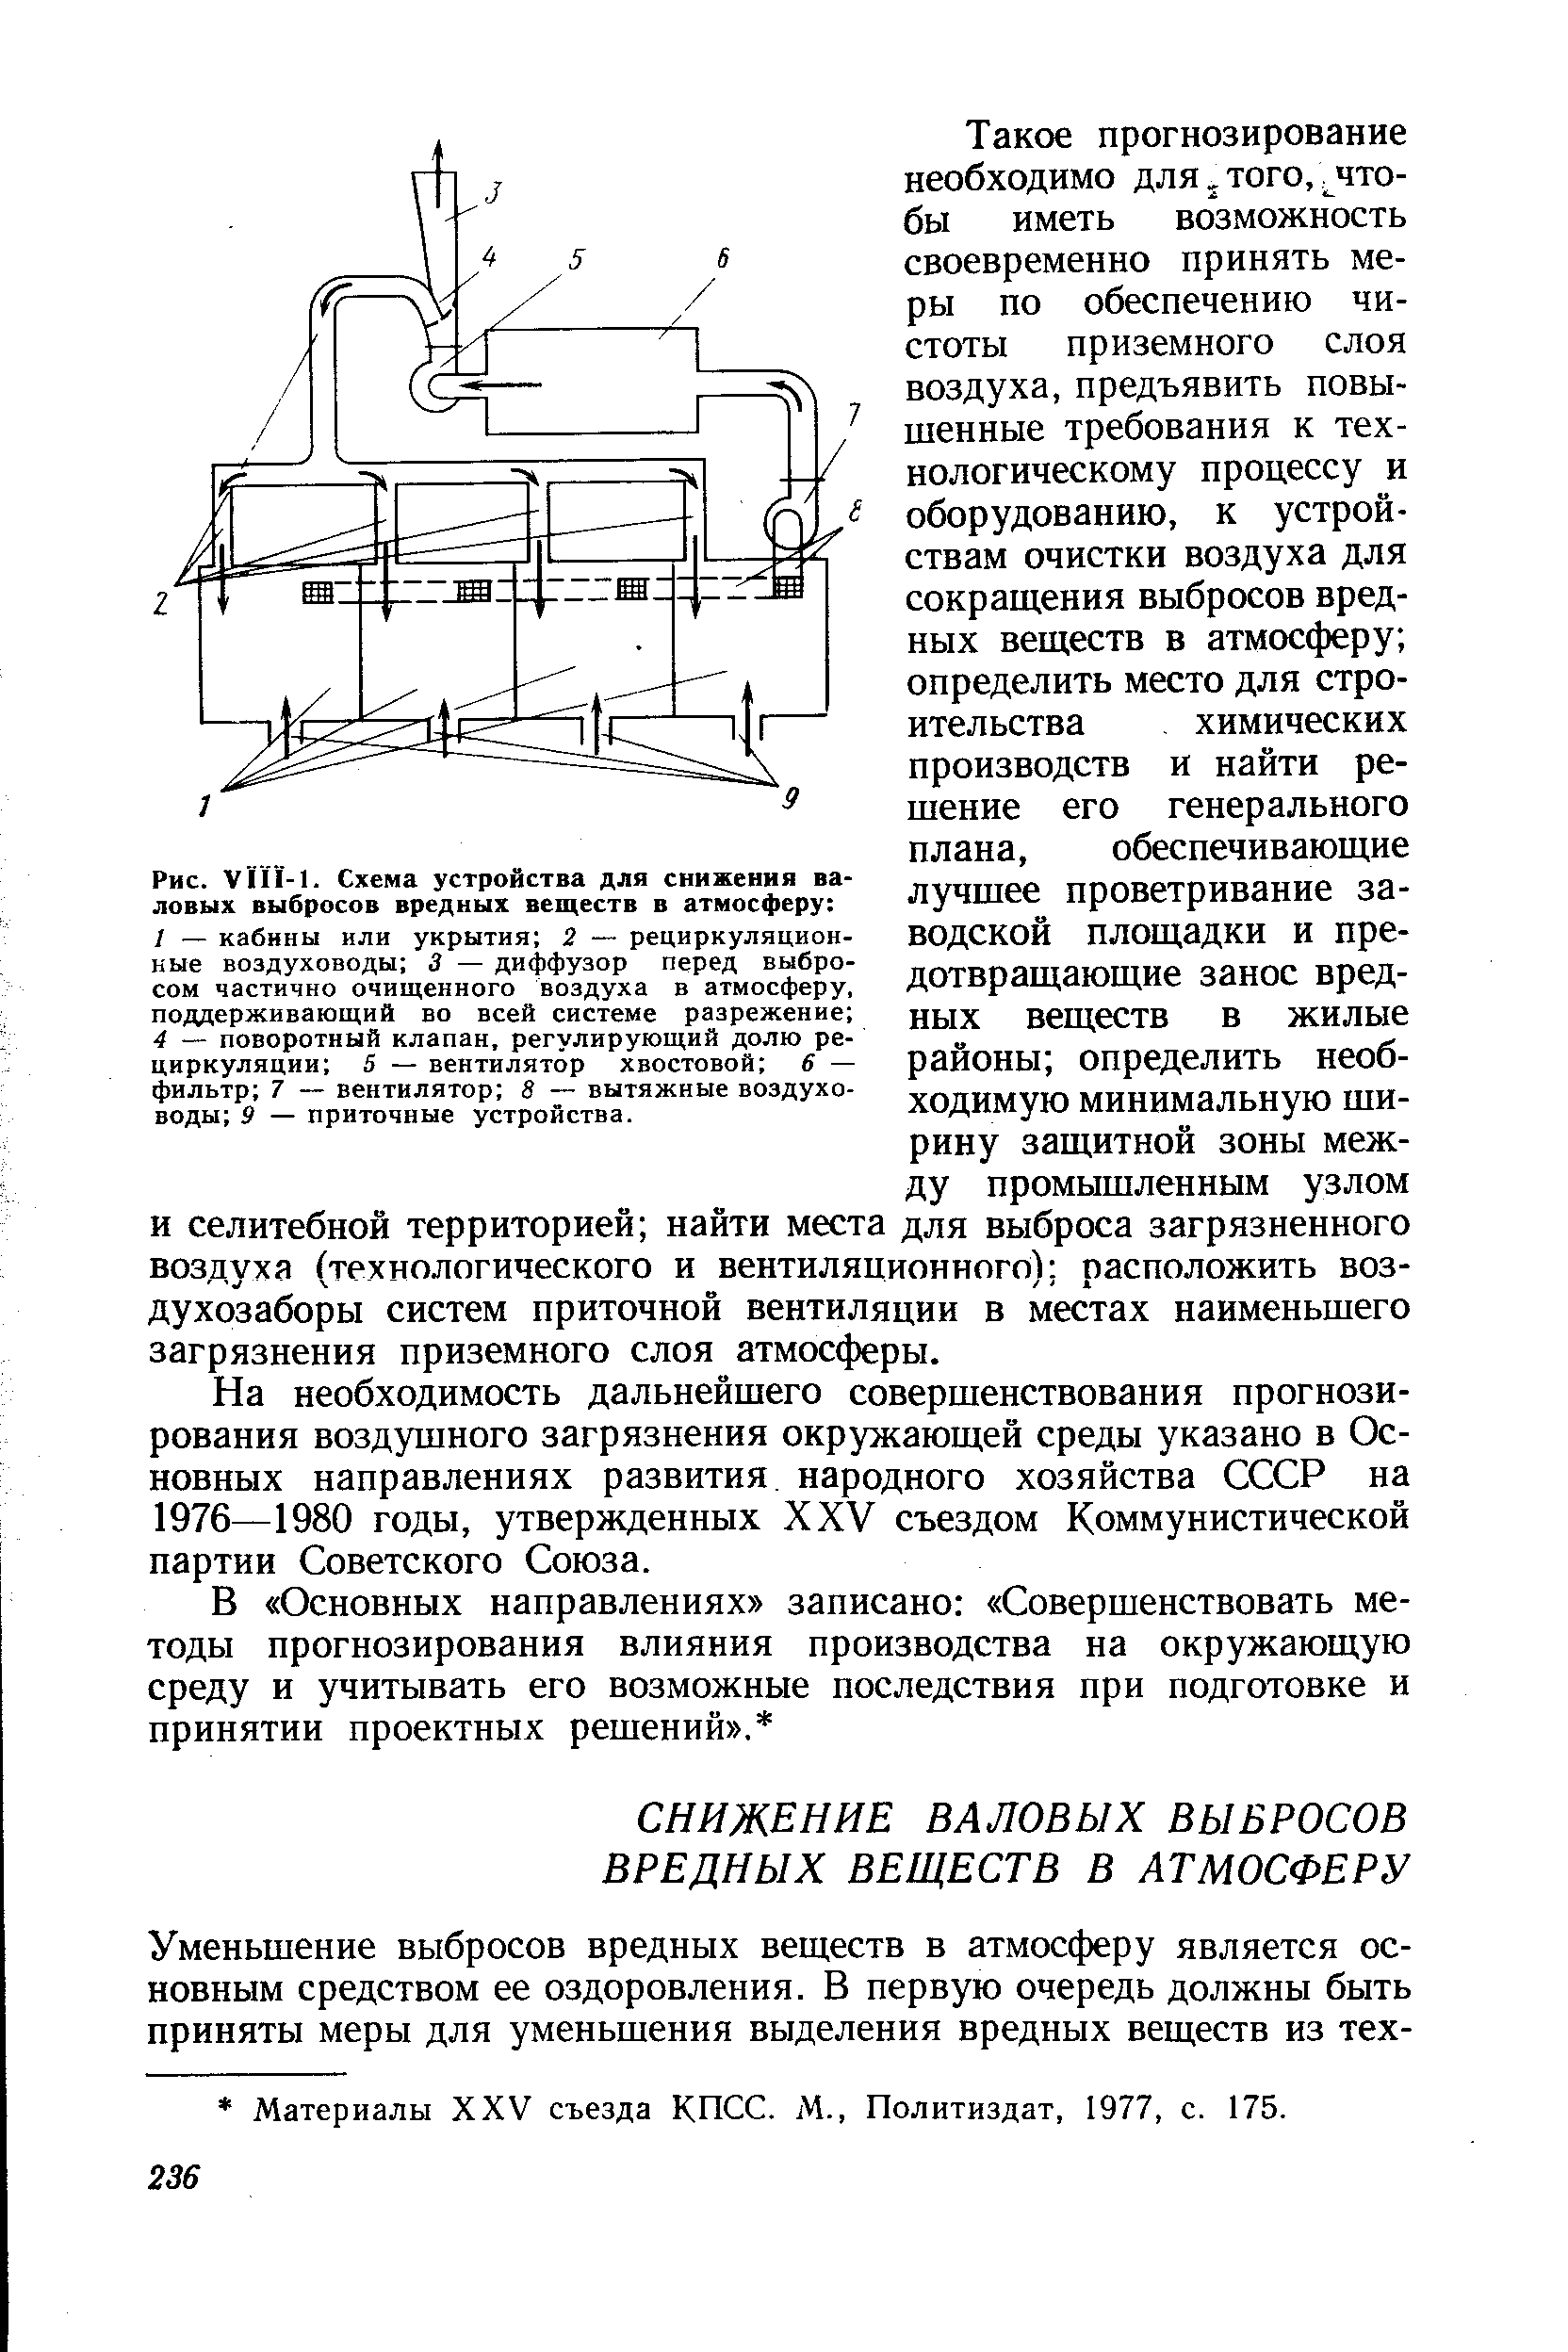 Материалы XXV съезда КПСС. М., Политиздат, 1977, с. 175.